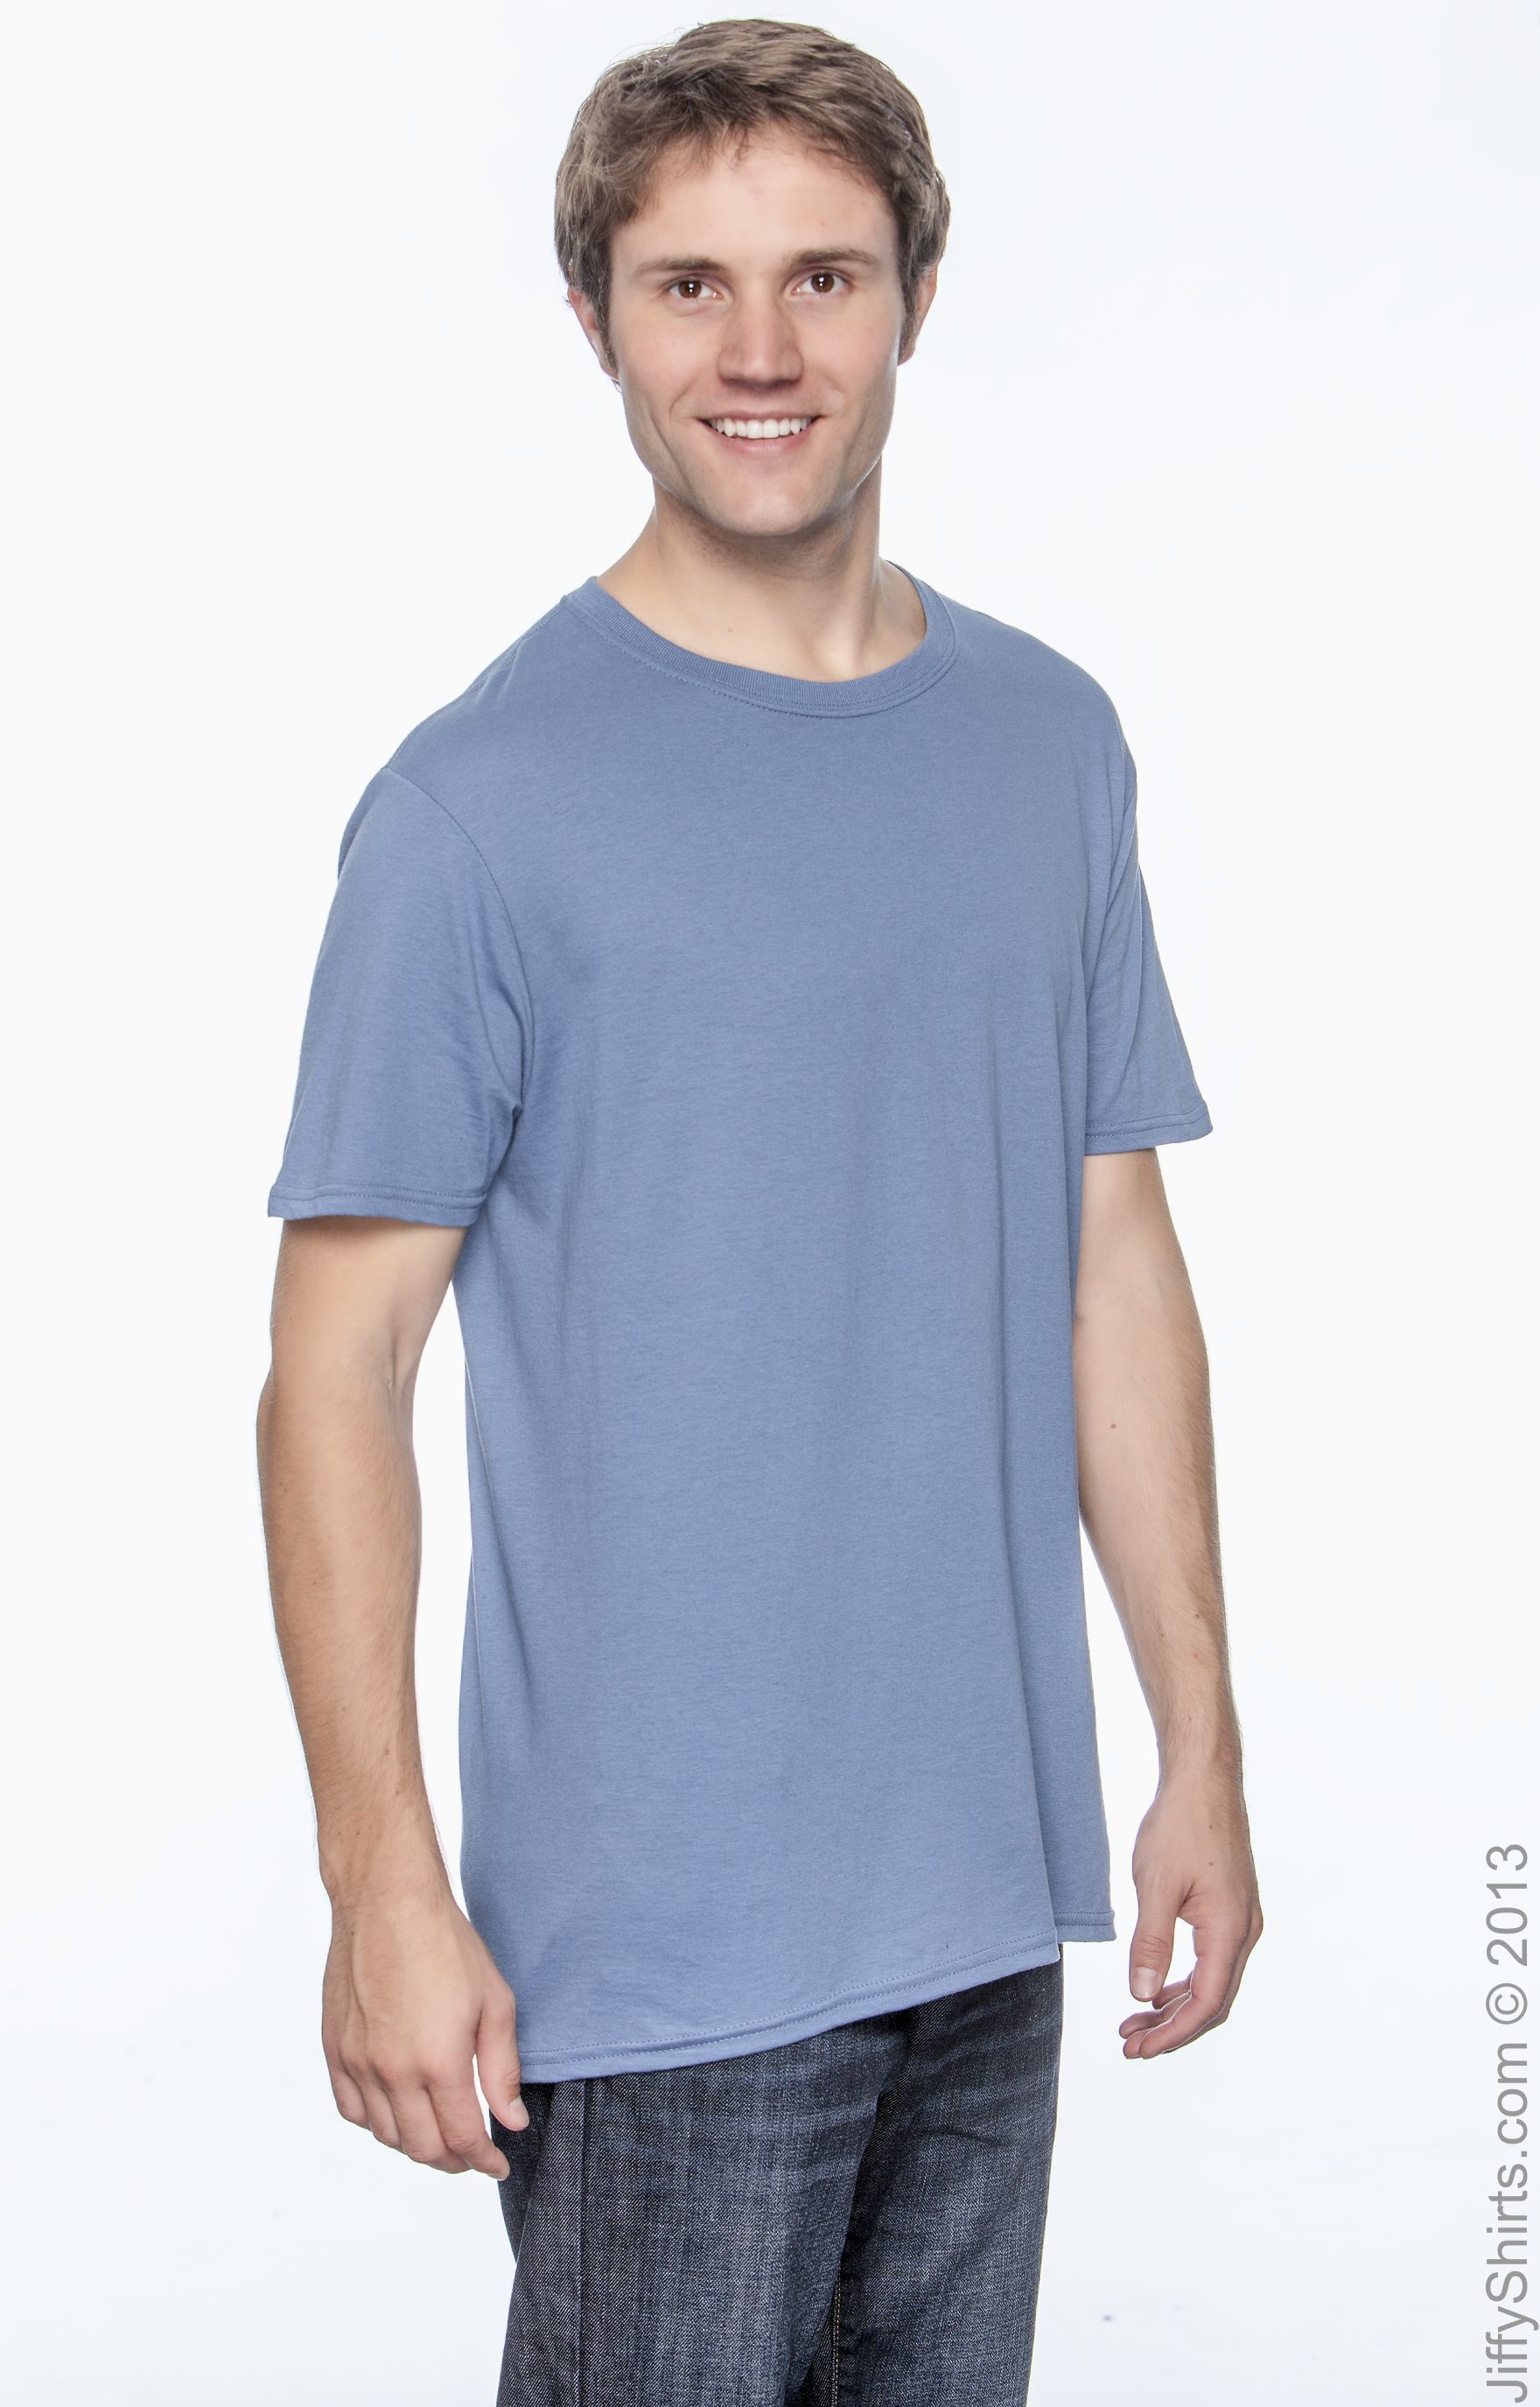 Lake T-shirt S M L 2XL Advice Unisex Blue Gildan 100% Cotton